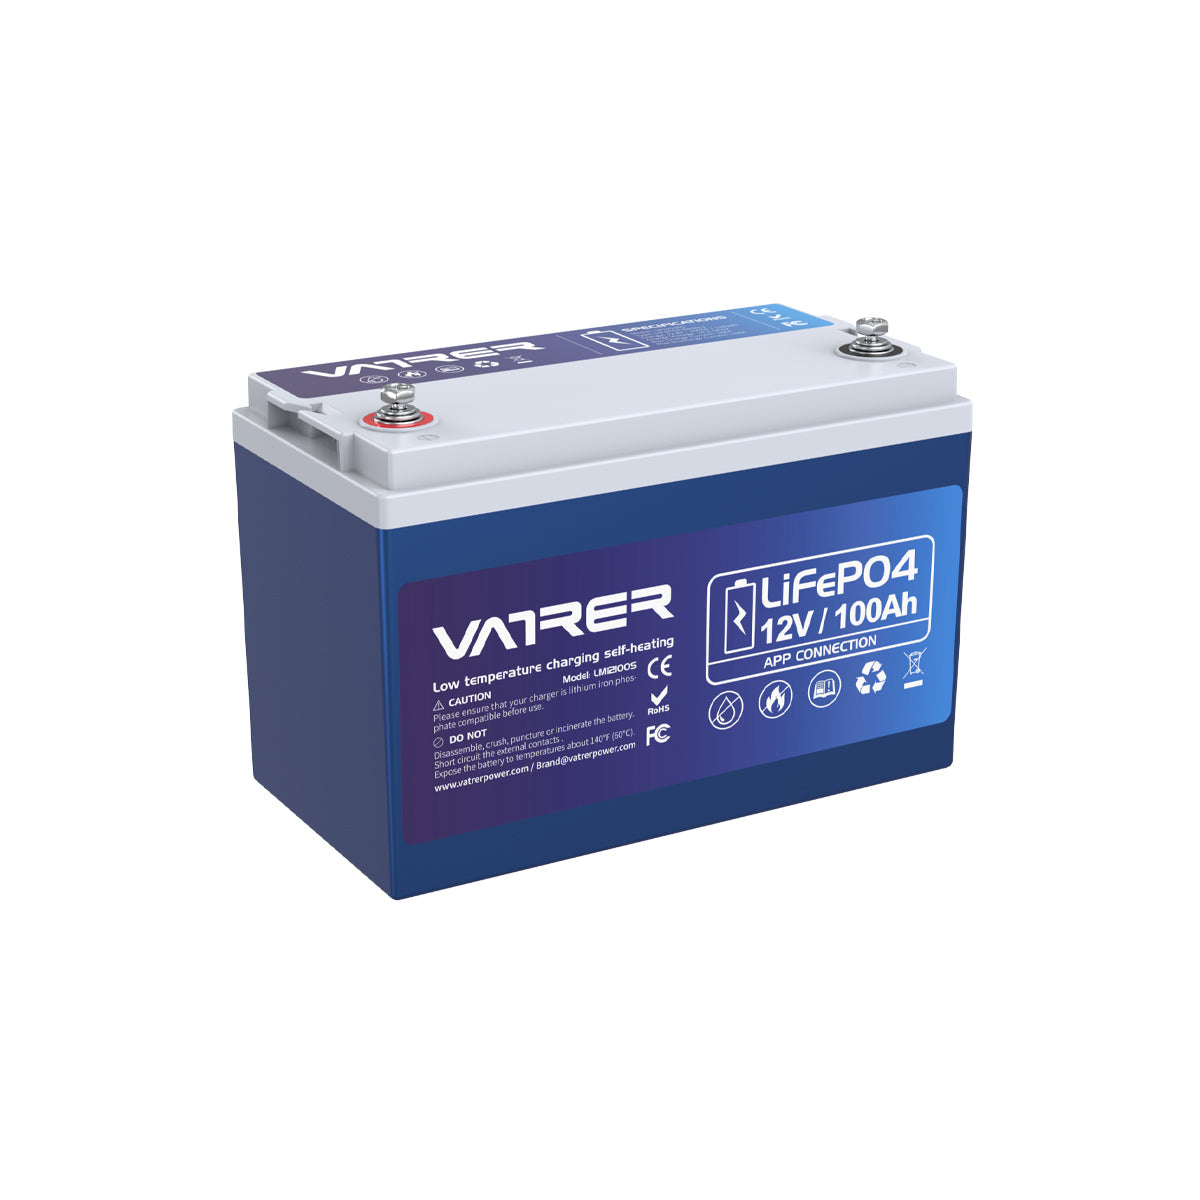 Vatrer 12V 100AH LiFePO4 Lithium Battery with APP Monitoring & Self-He- Vatrer